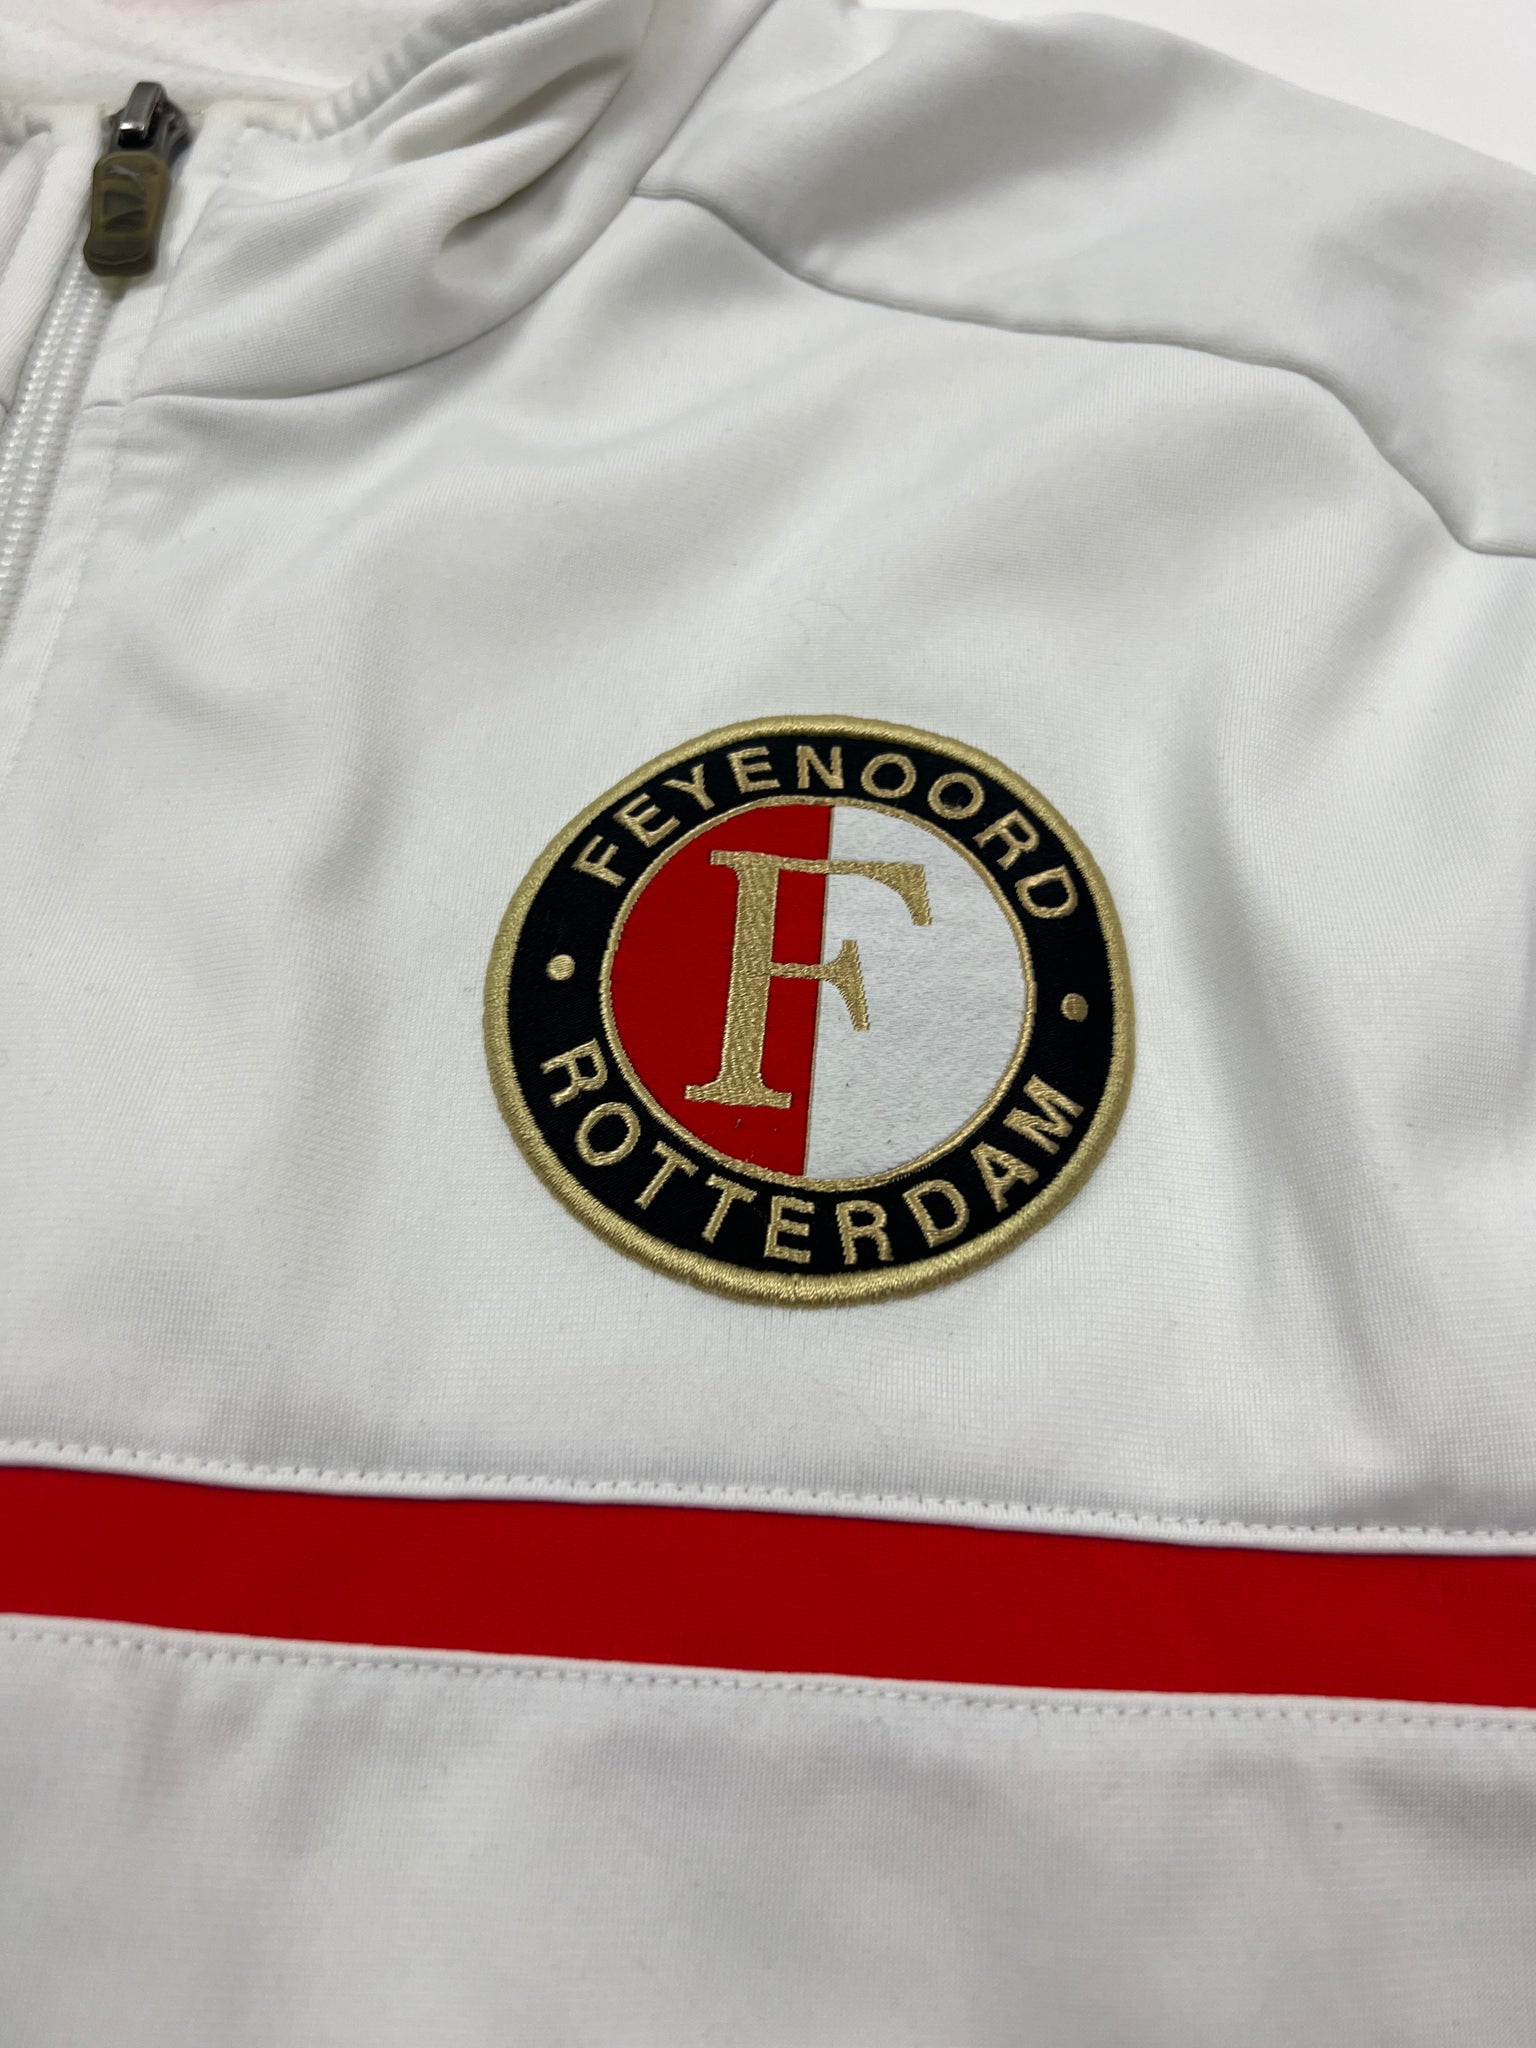 Puma Rotterdam Feyenoord Track Jacket (M)